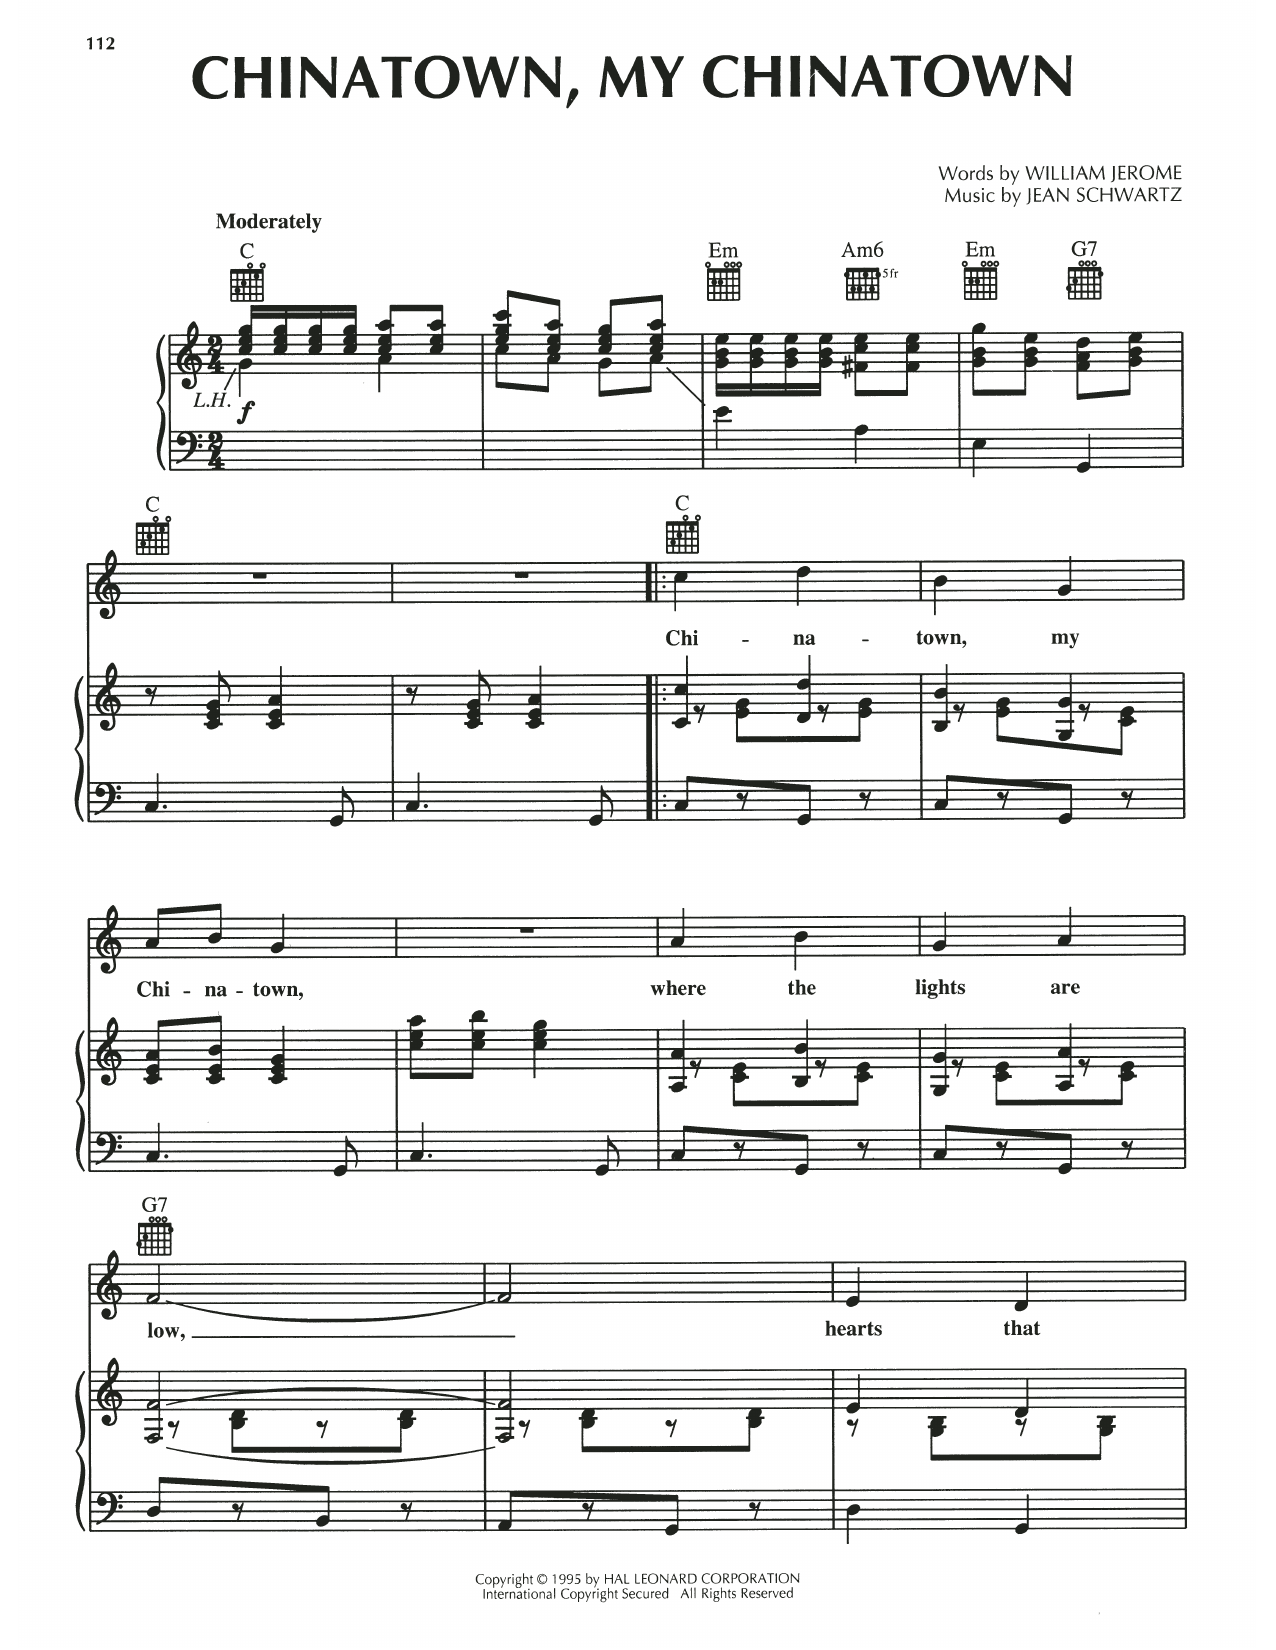 William Jerome Chinatown, My Chinatown sheet music notes printable PDF score